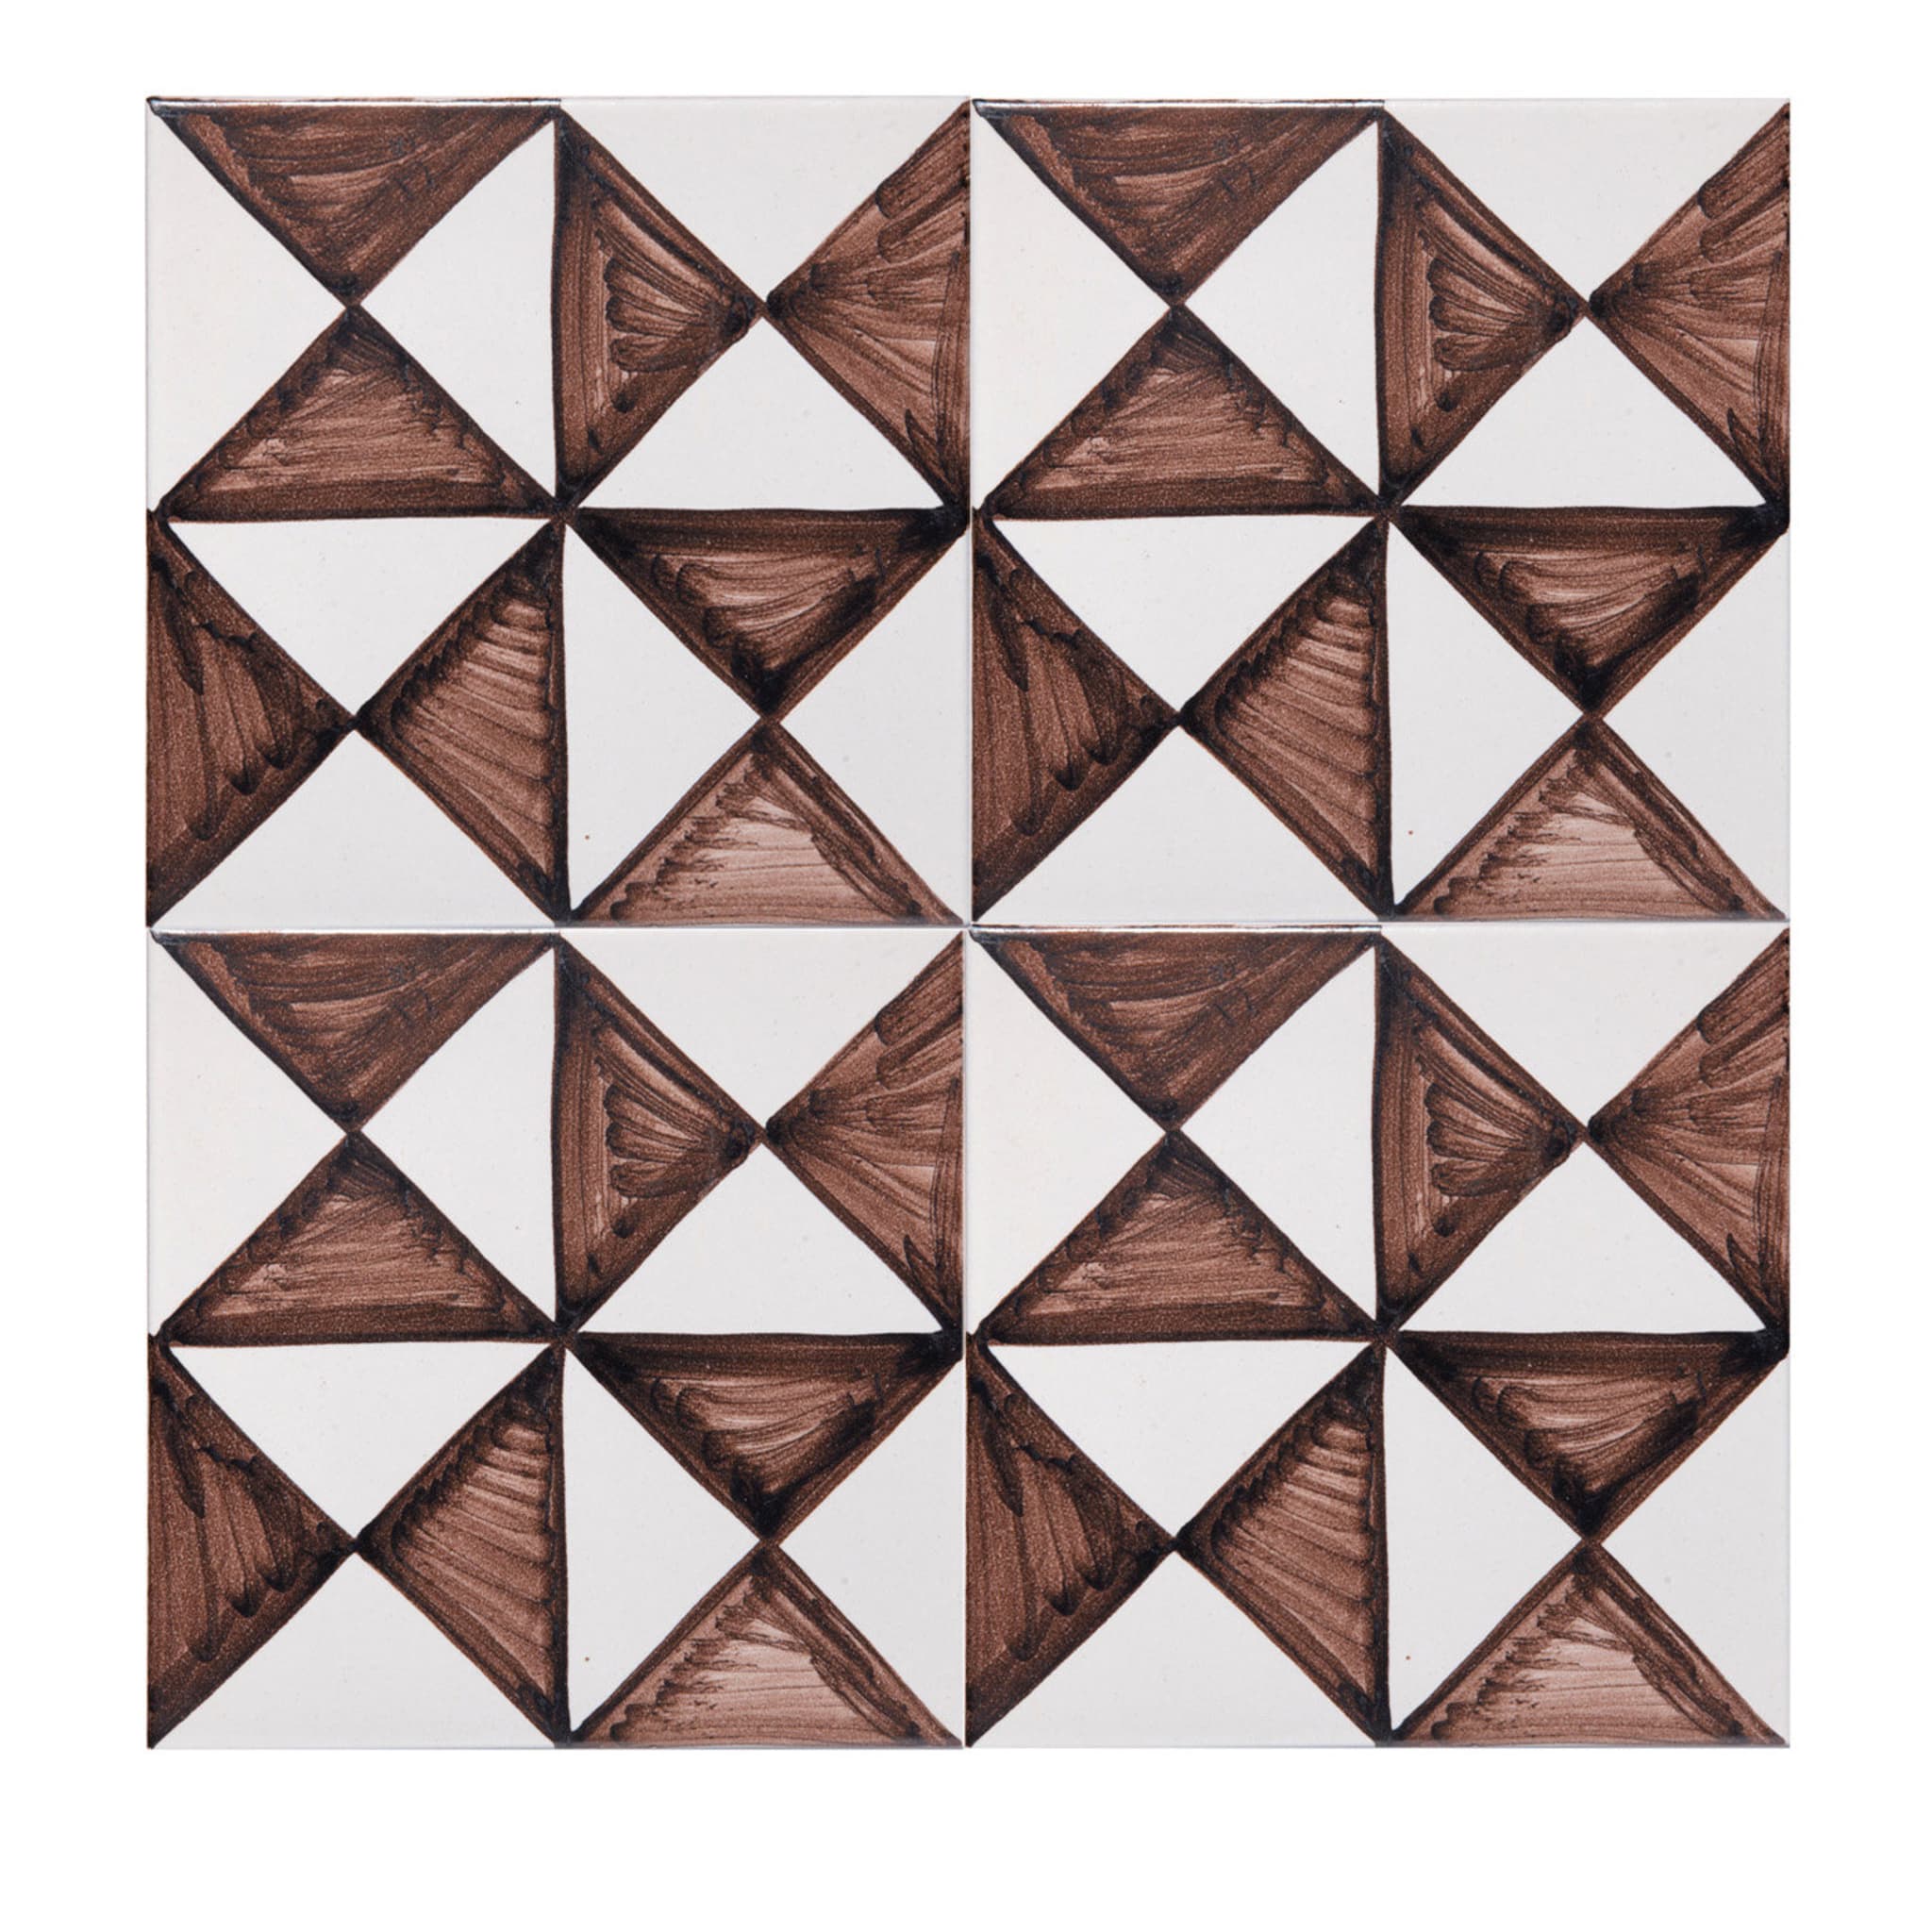 Set of 4 Riggiola Brown Tiles - Main view